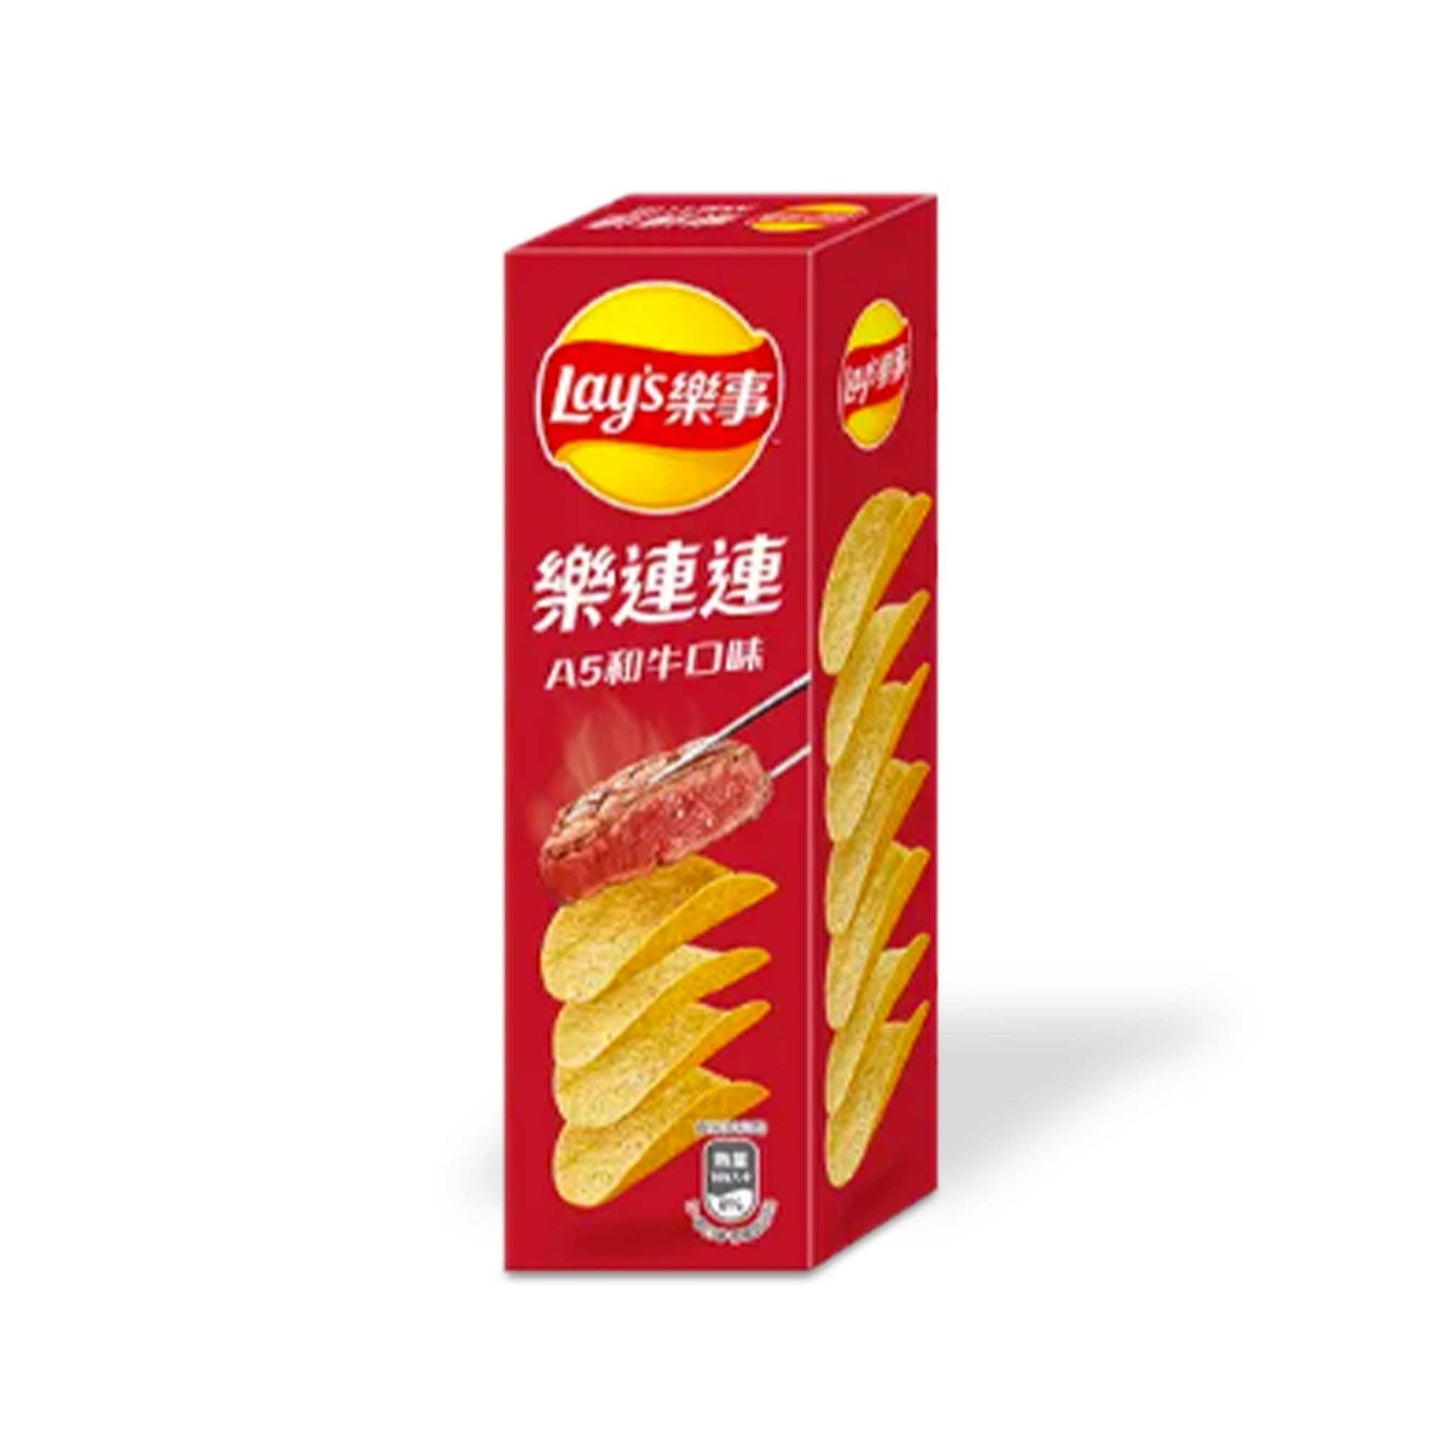 Lay's Potato Chips: A5 Wagyu Beef (30g) (China) 6-Pack